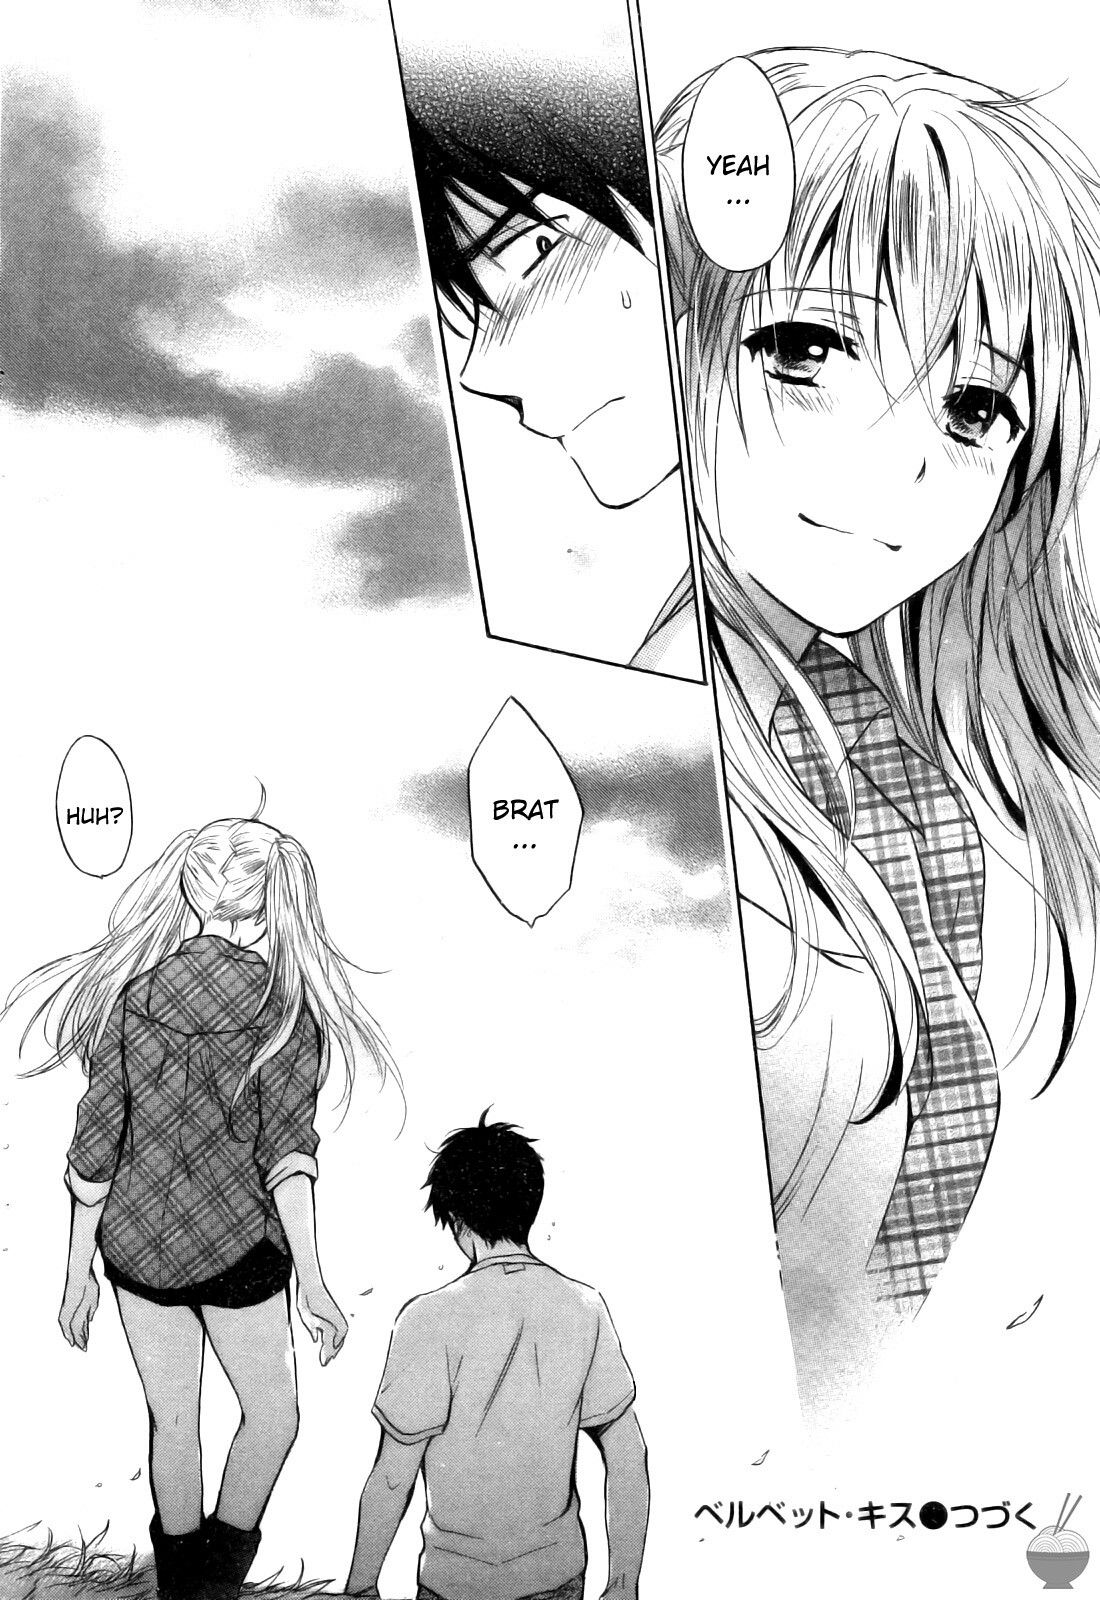 Adult romance manga